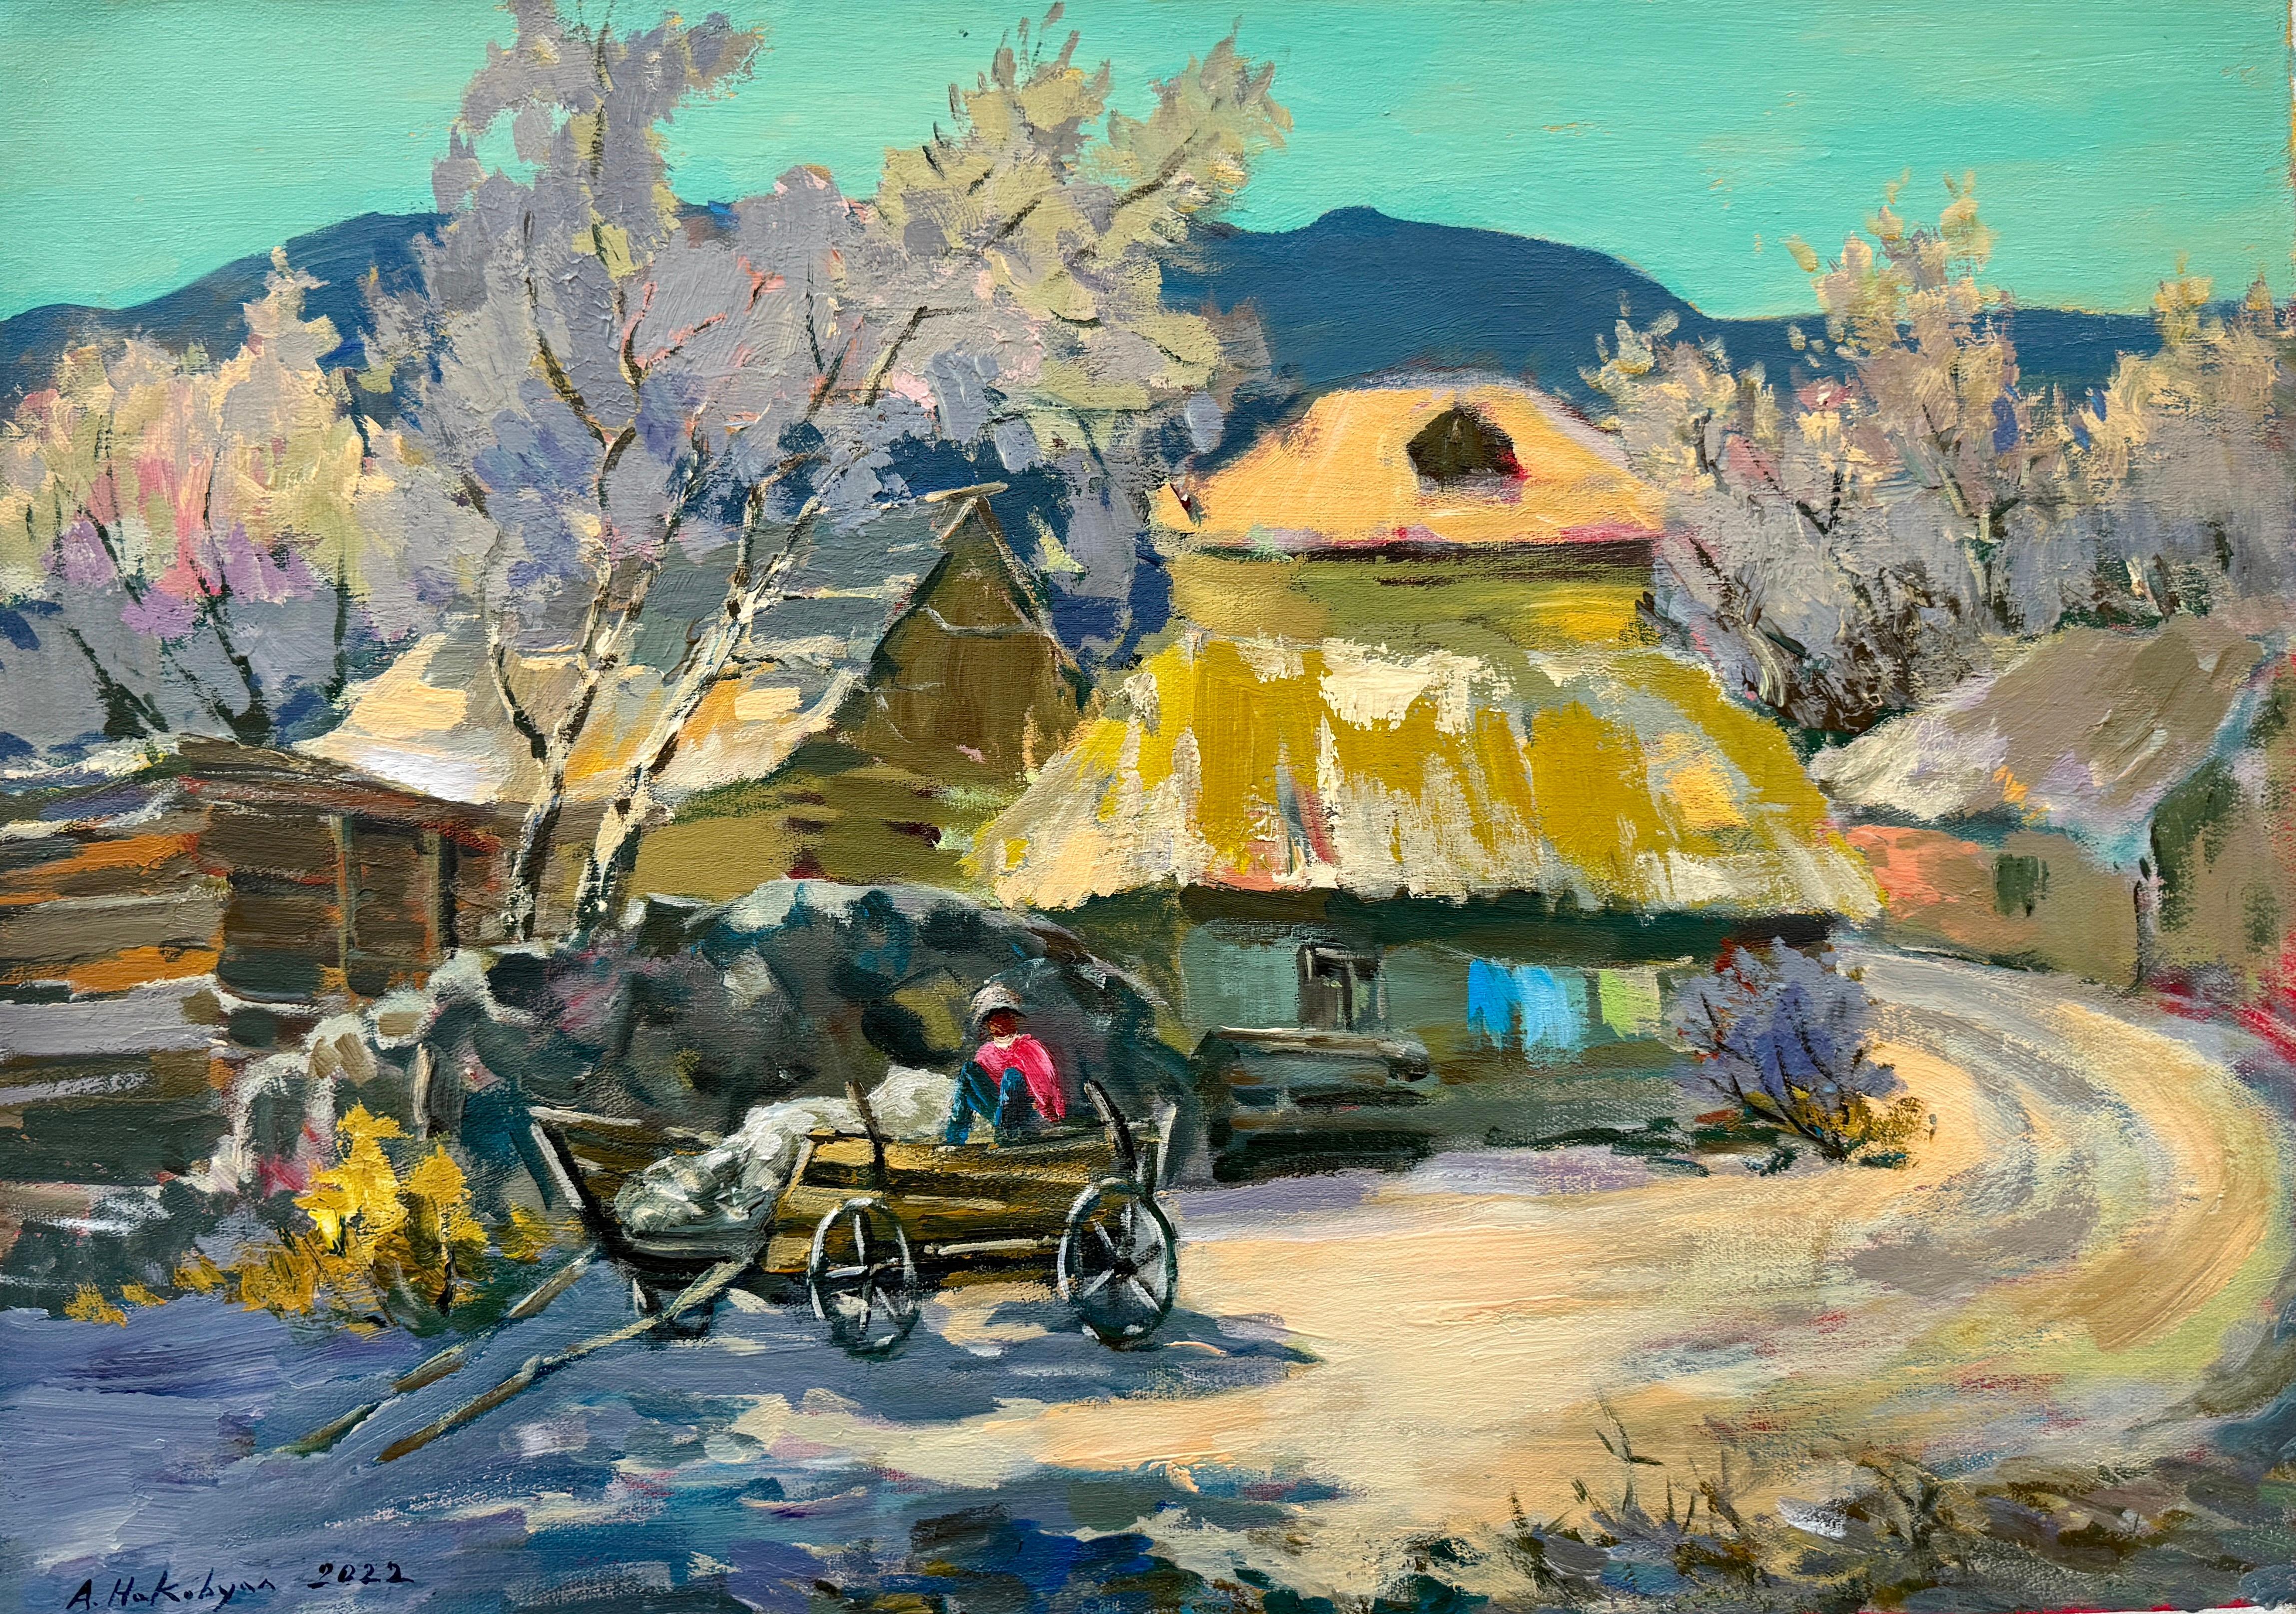 Ara H. Hakobyan Landscape Painting - Color-full Winter, Landscape Impressionism, Original Painting, One of a Kind